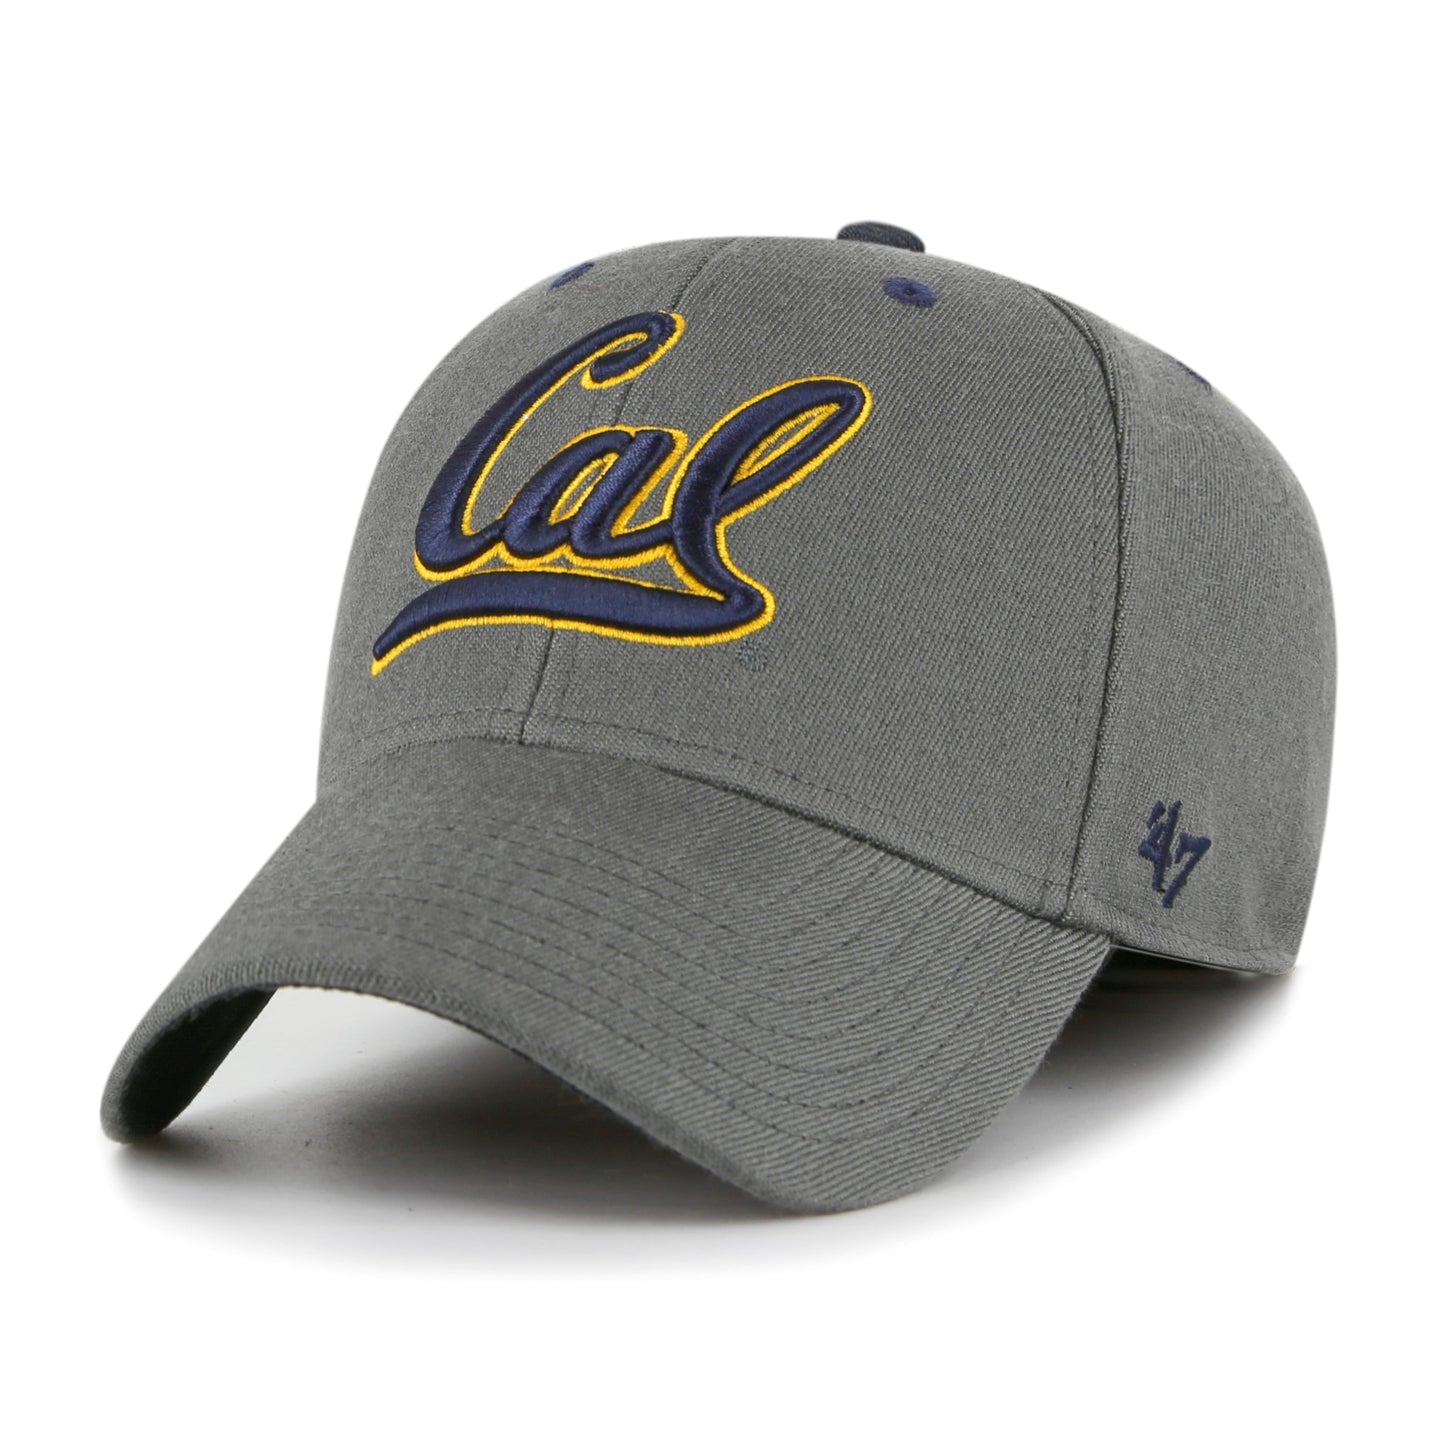 U.C. Berkeley Cal embroidered Flex fit contender wool blend hat-Charcoal-Shop College Wear